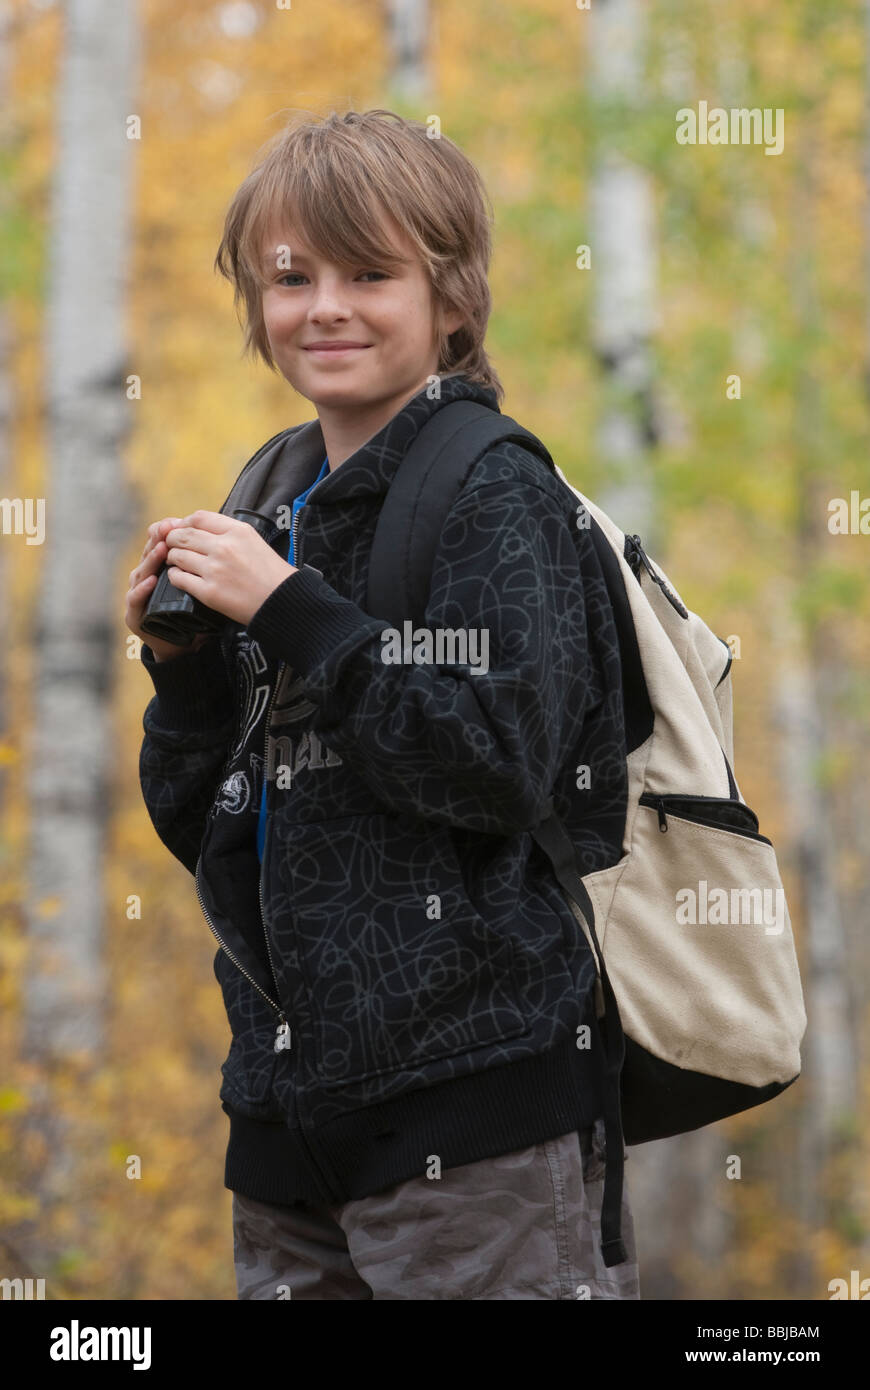 Smiling 10 year old boy with binoculars and hemp backpack, Lake Katherine, Riding Mountain National Park, Manitoba Stock Photo